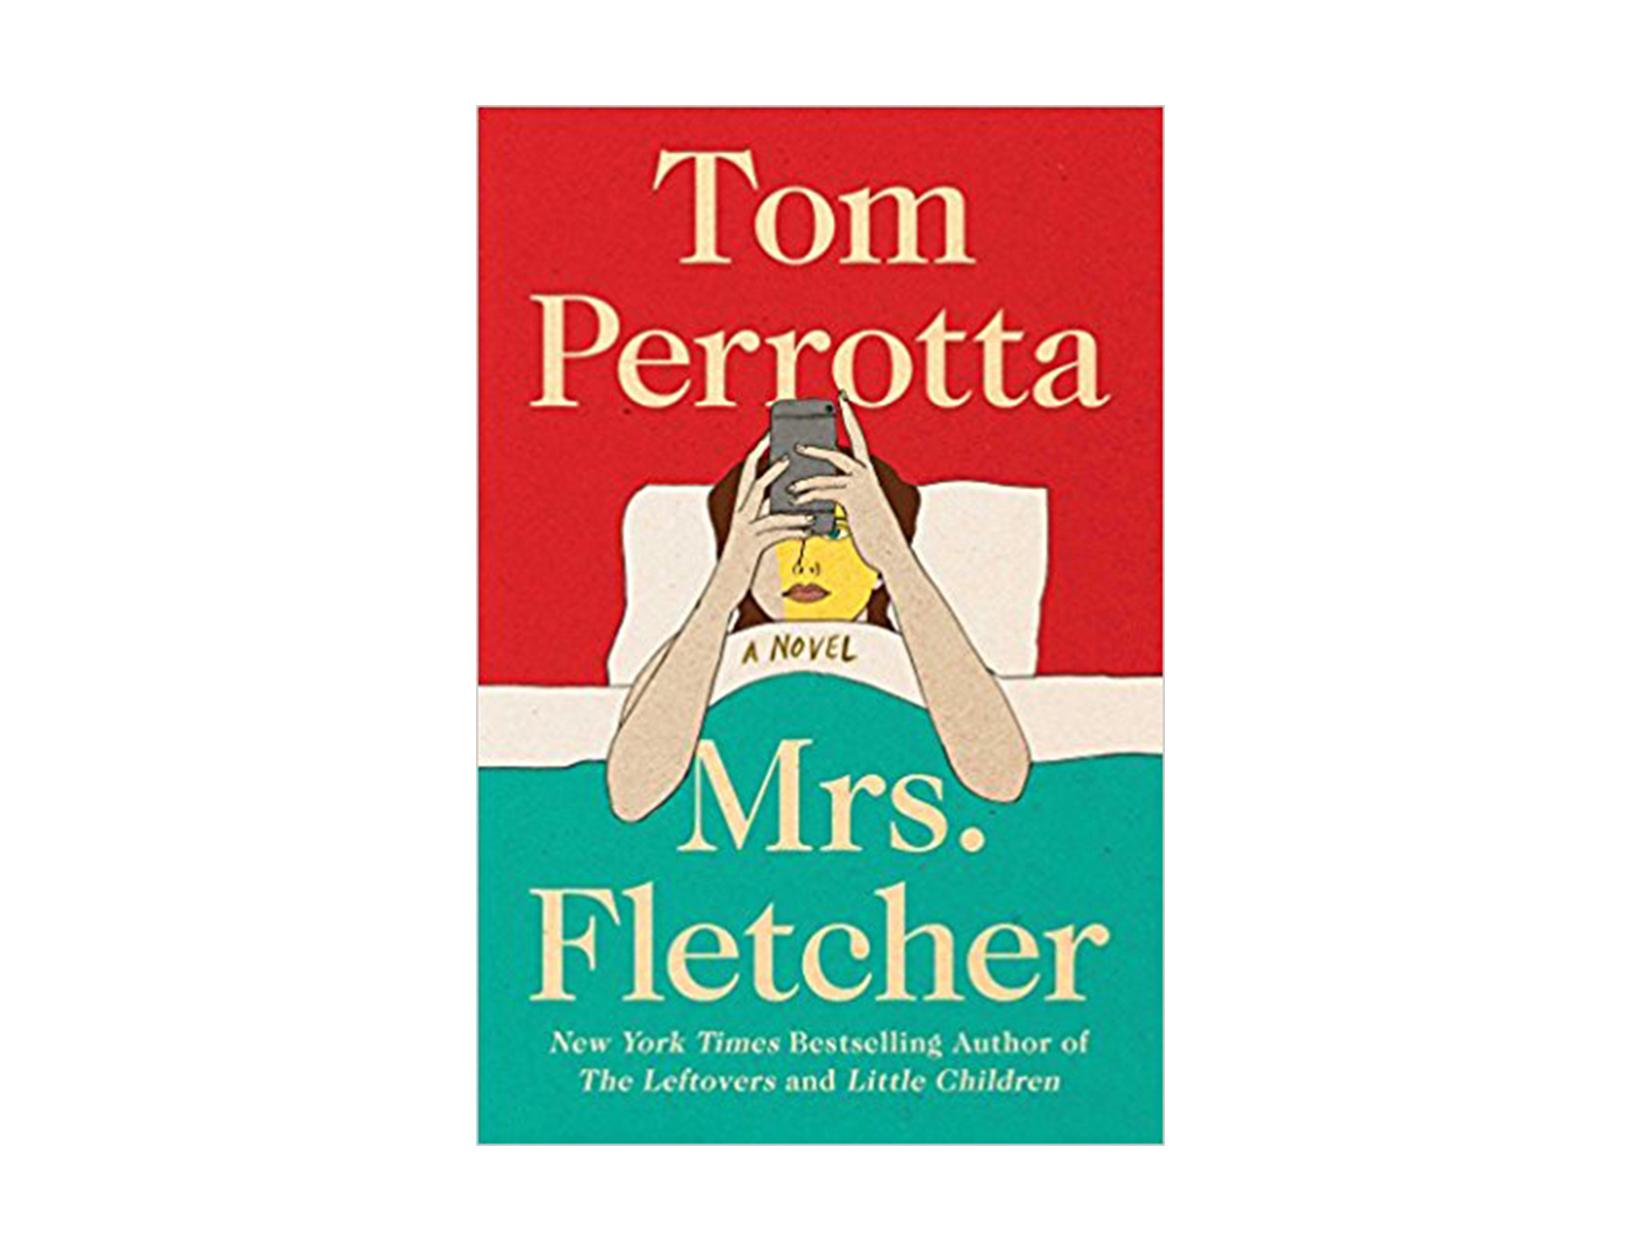 Mrs. Fletcher by Tom Perrotta